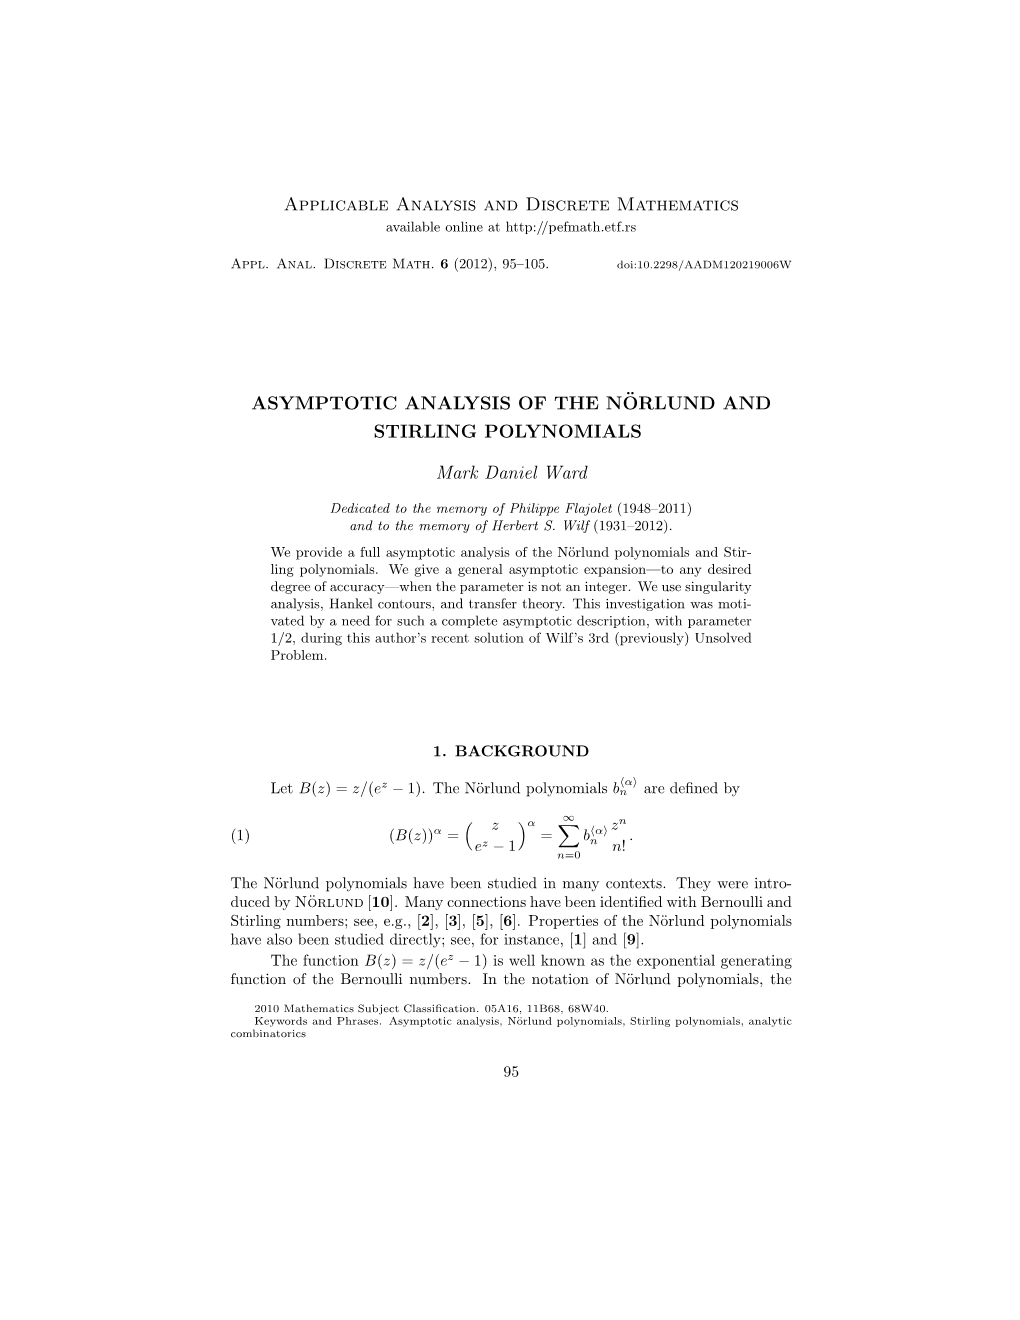 Applicable Analysis and Discrete Mathematics ASYMPTOTIC